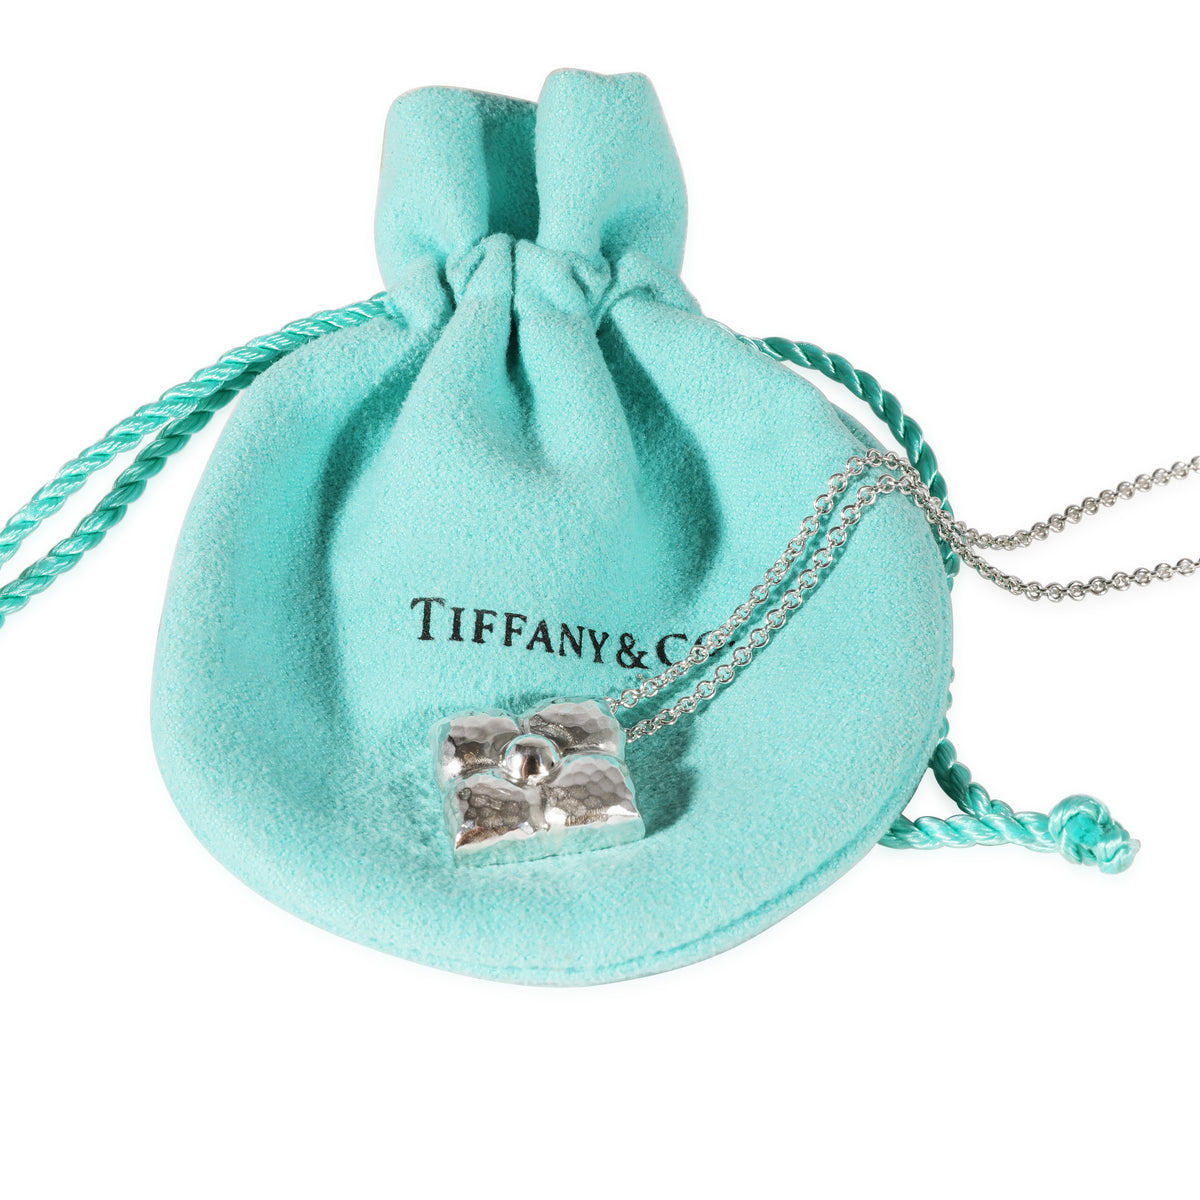 Tiffany & Co. Paloma Picasso Fiore Pendant in Sterling Silver on a Chain